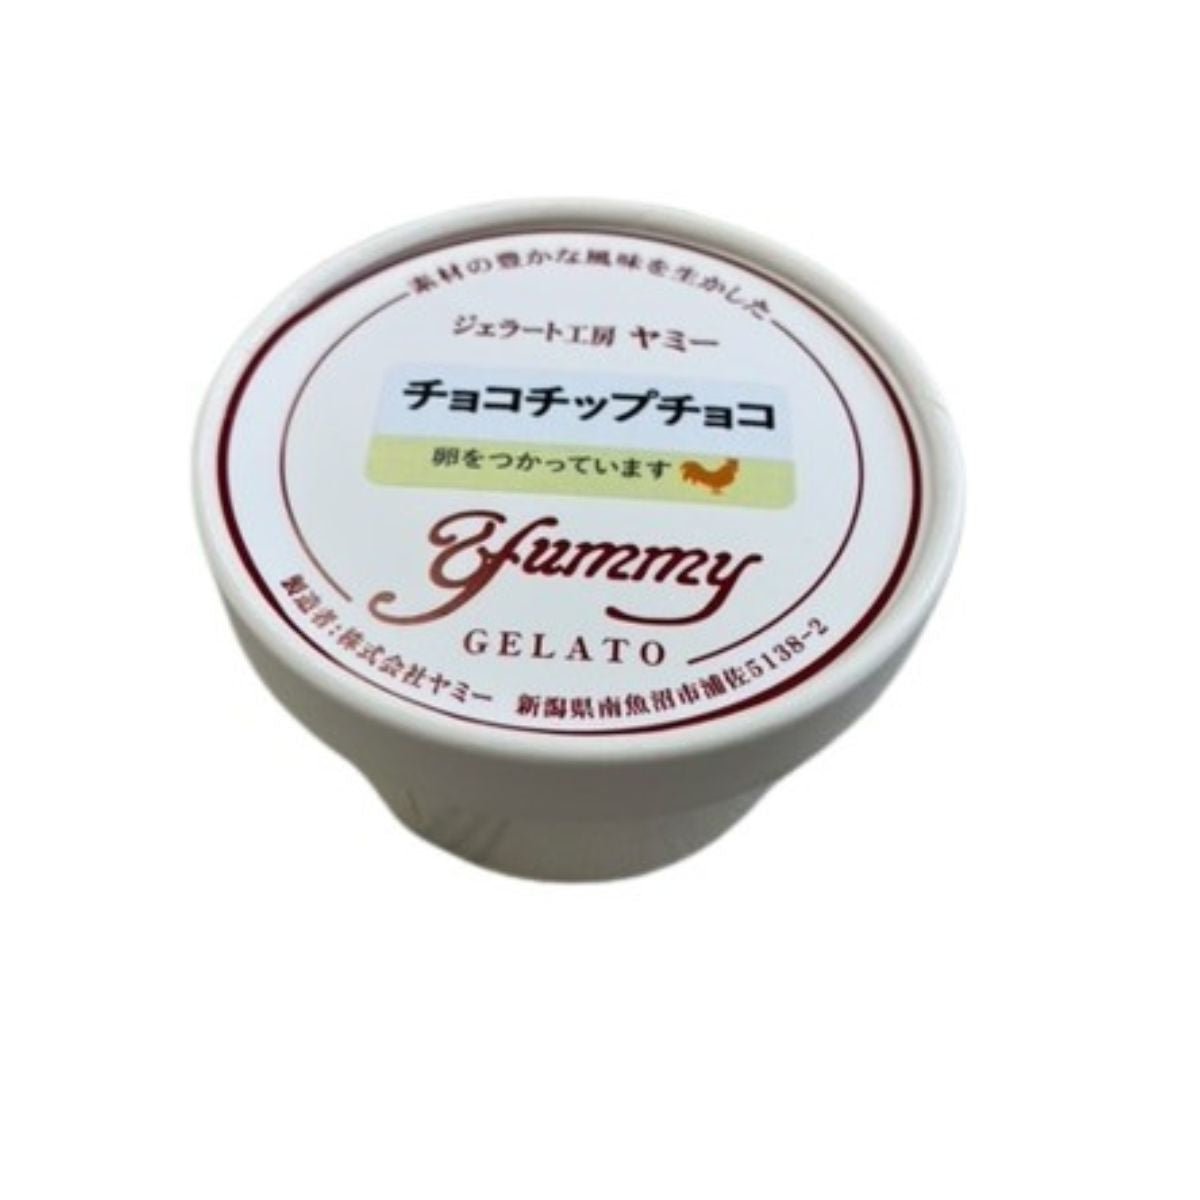 Yummy YUMMY Gelato Chocolate Chip - Tokyo Fresh Direct